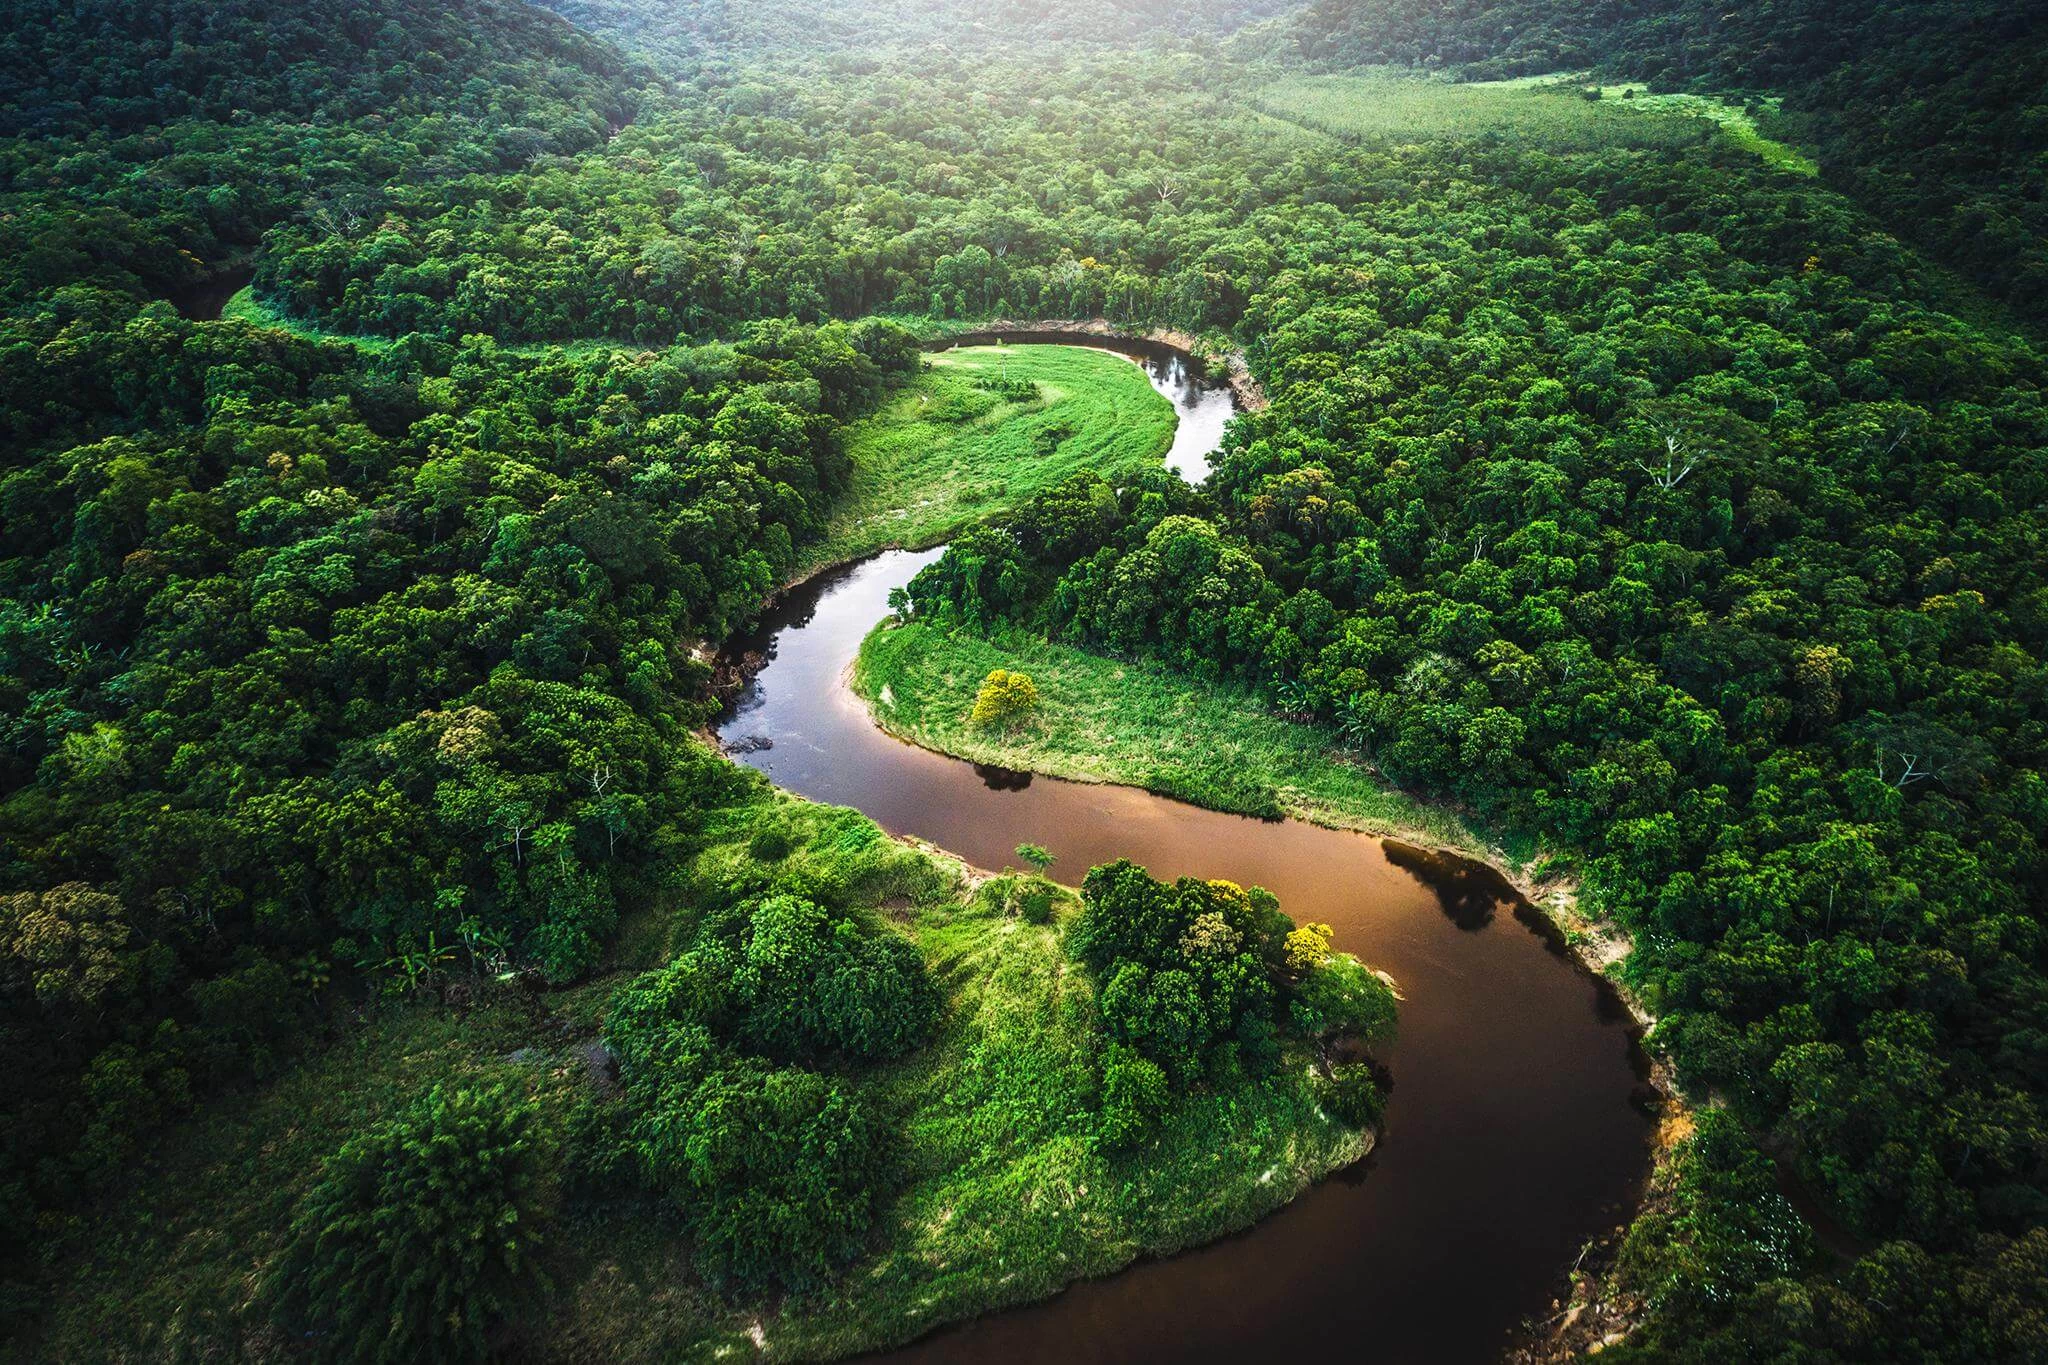 Explorando la belleza natural de la selva amazónica